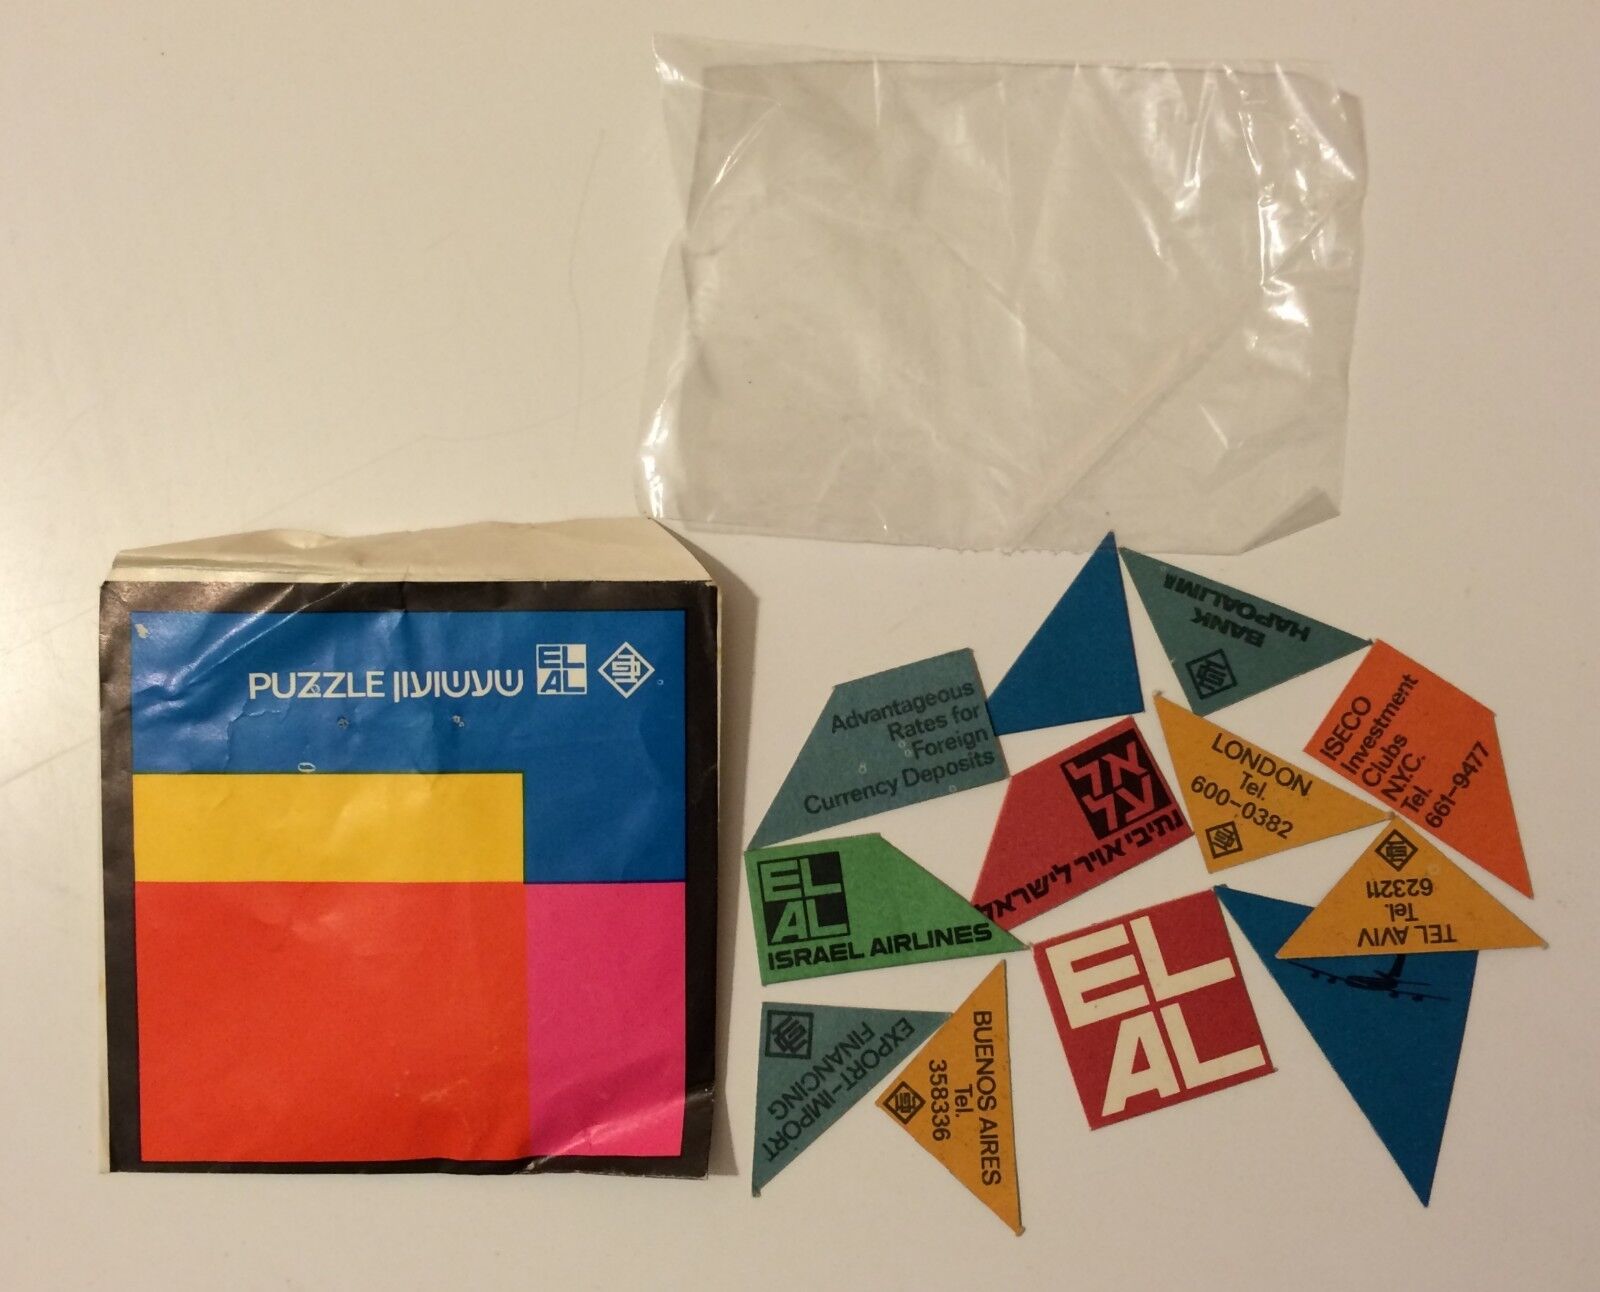 EL AL ISRAEL AIRLINES & Bank Hapoalim - Puzzle game - Envelope + 12 Game Parts 